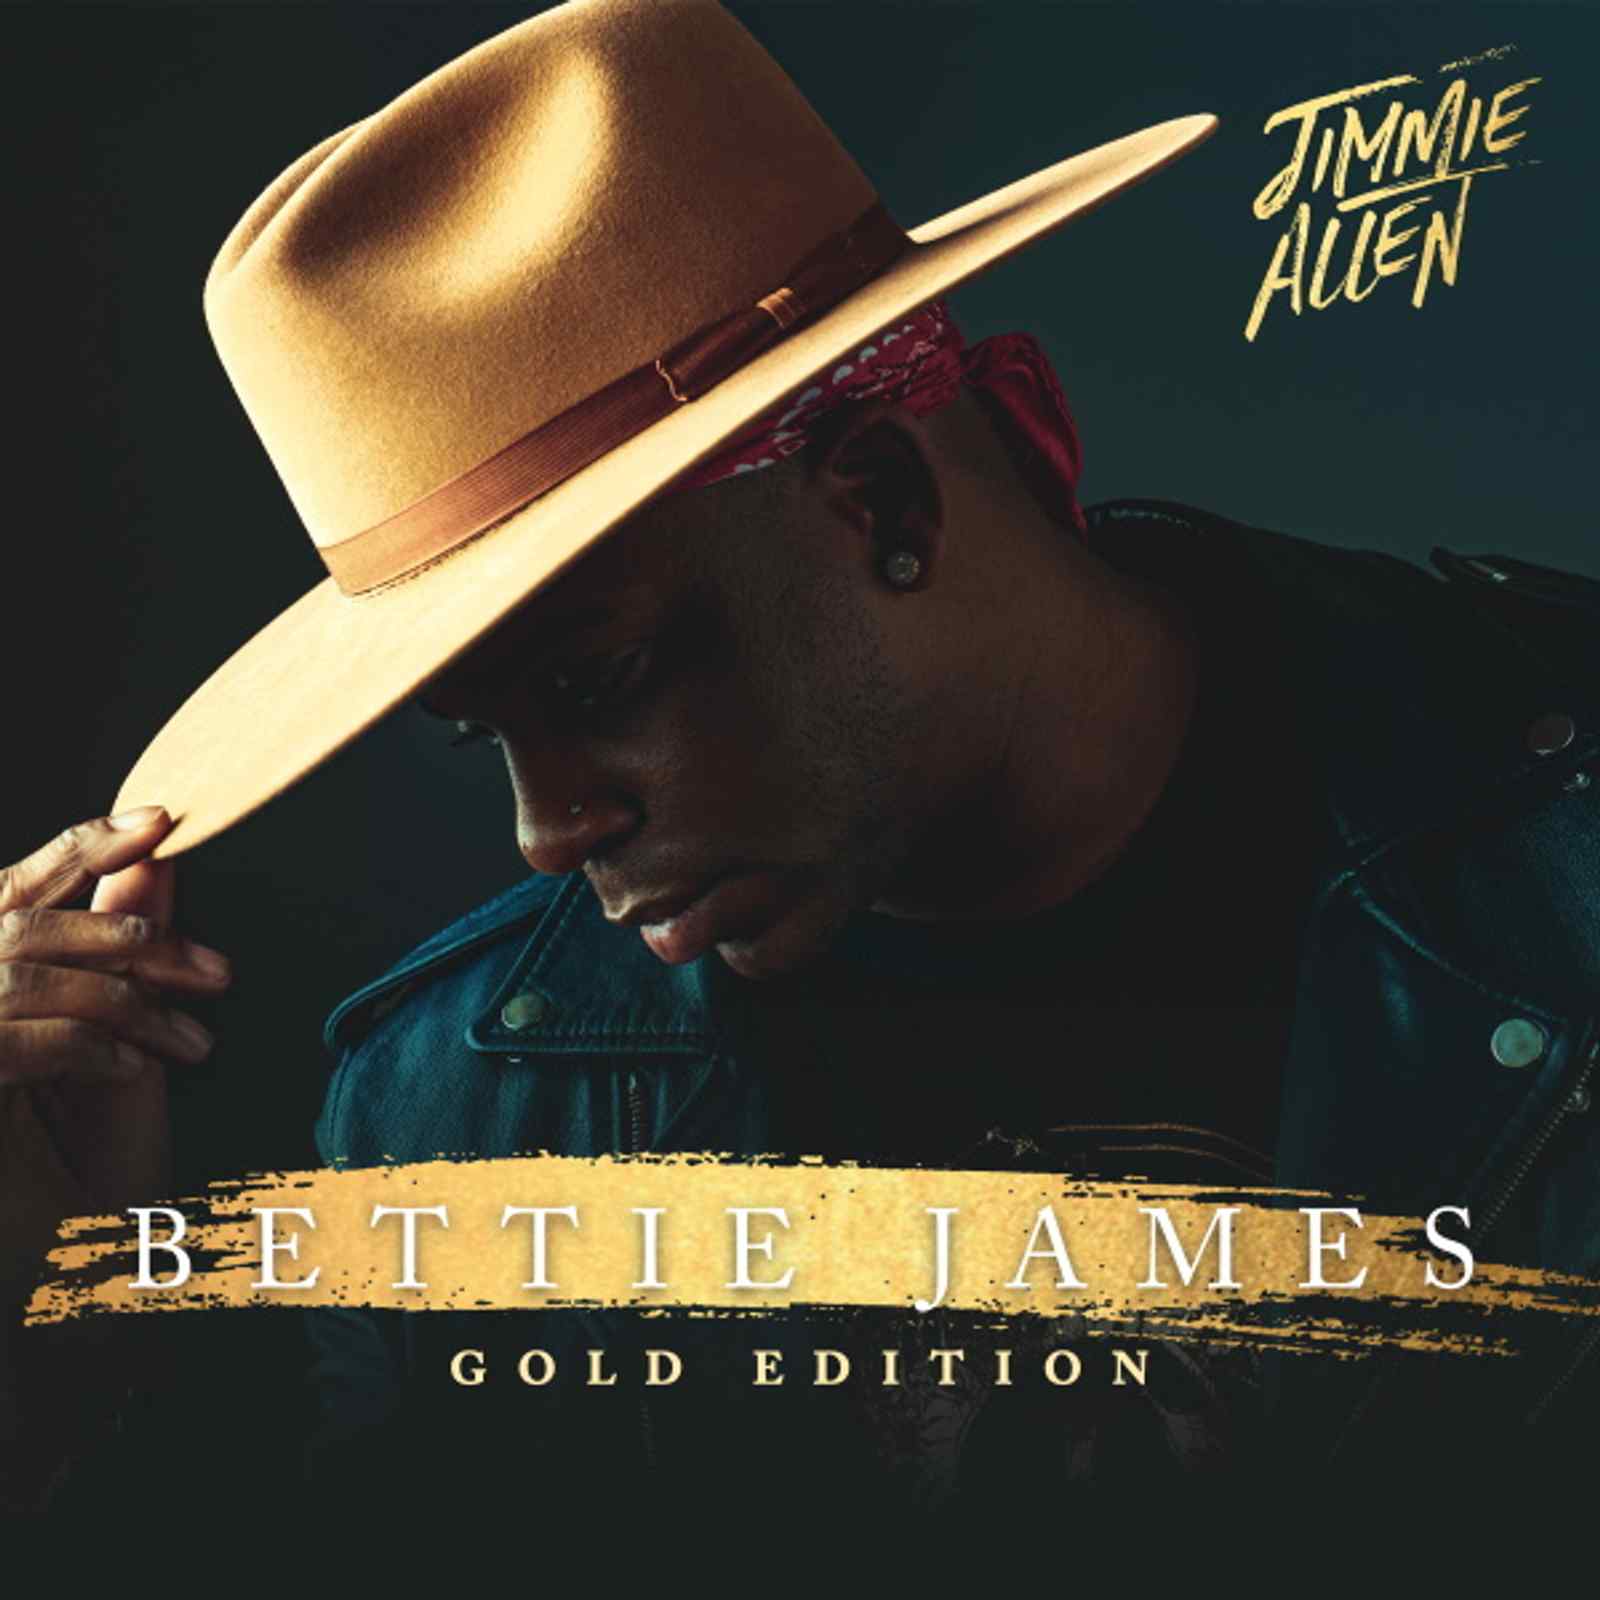 Bettie James (Gold Edition) by Jimmie Allen